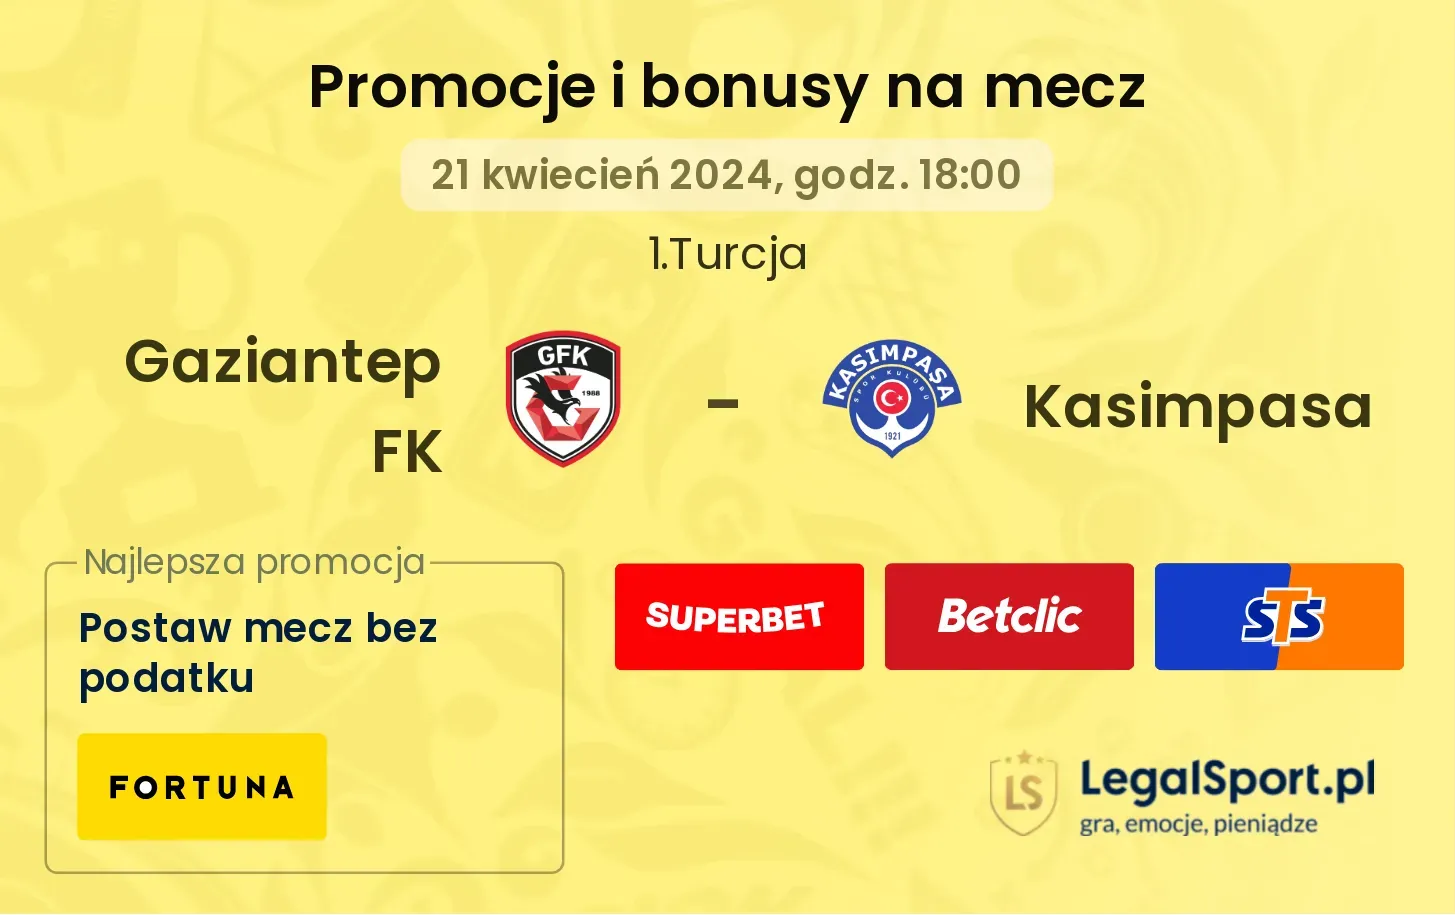 Gaziantep FK - Kasimpasa promocje bonusy na mecz